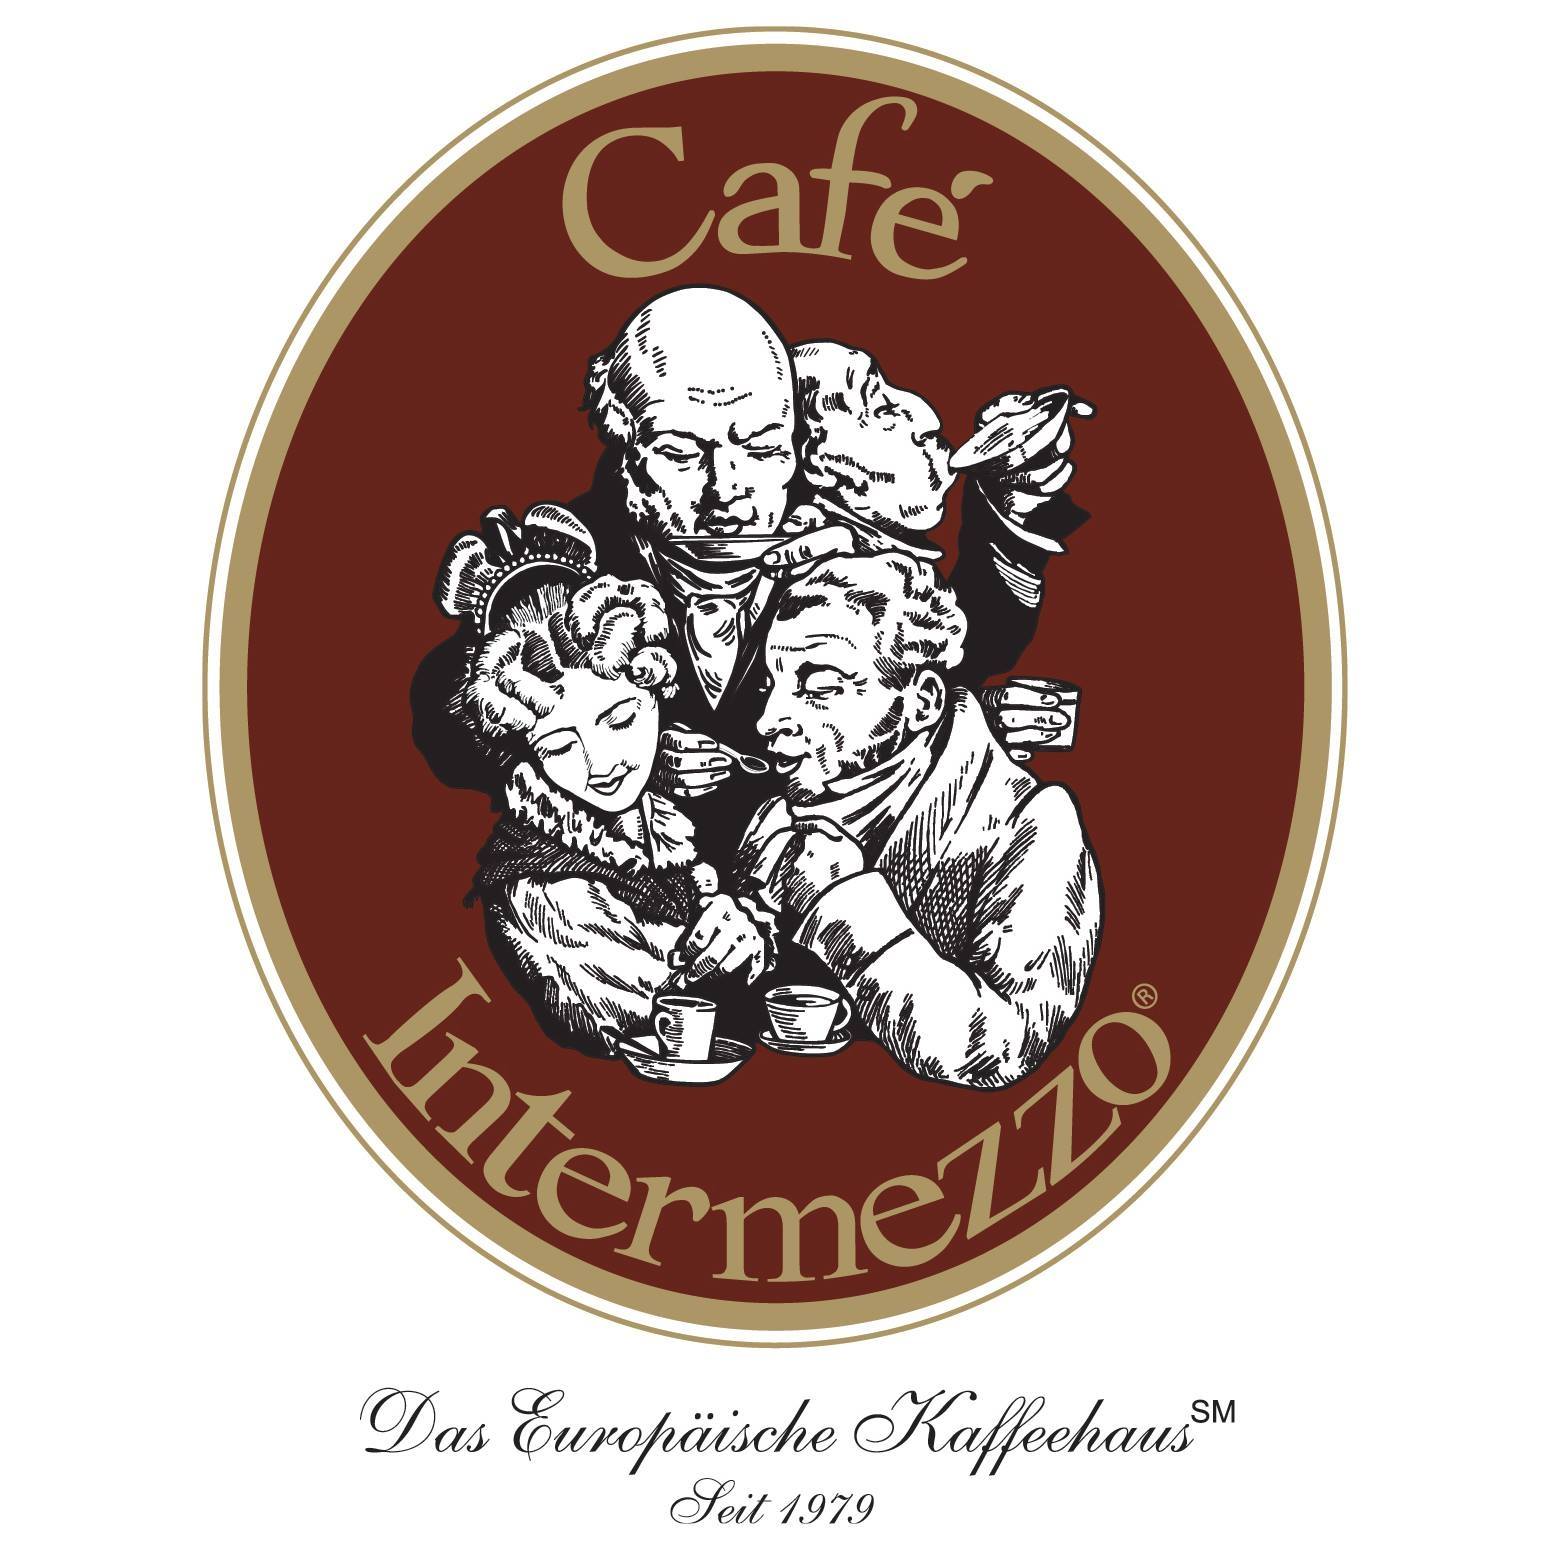 Café Intermezzo